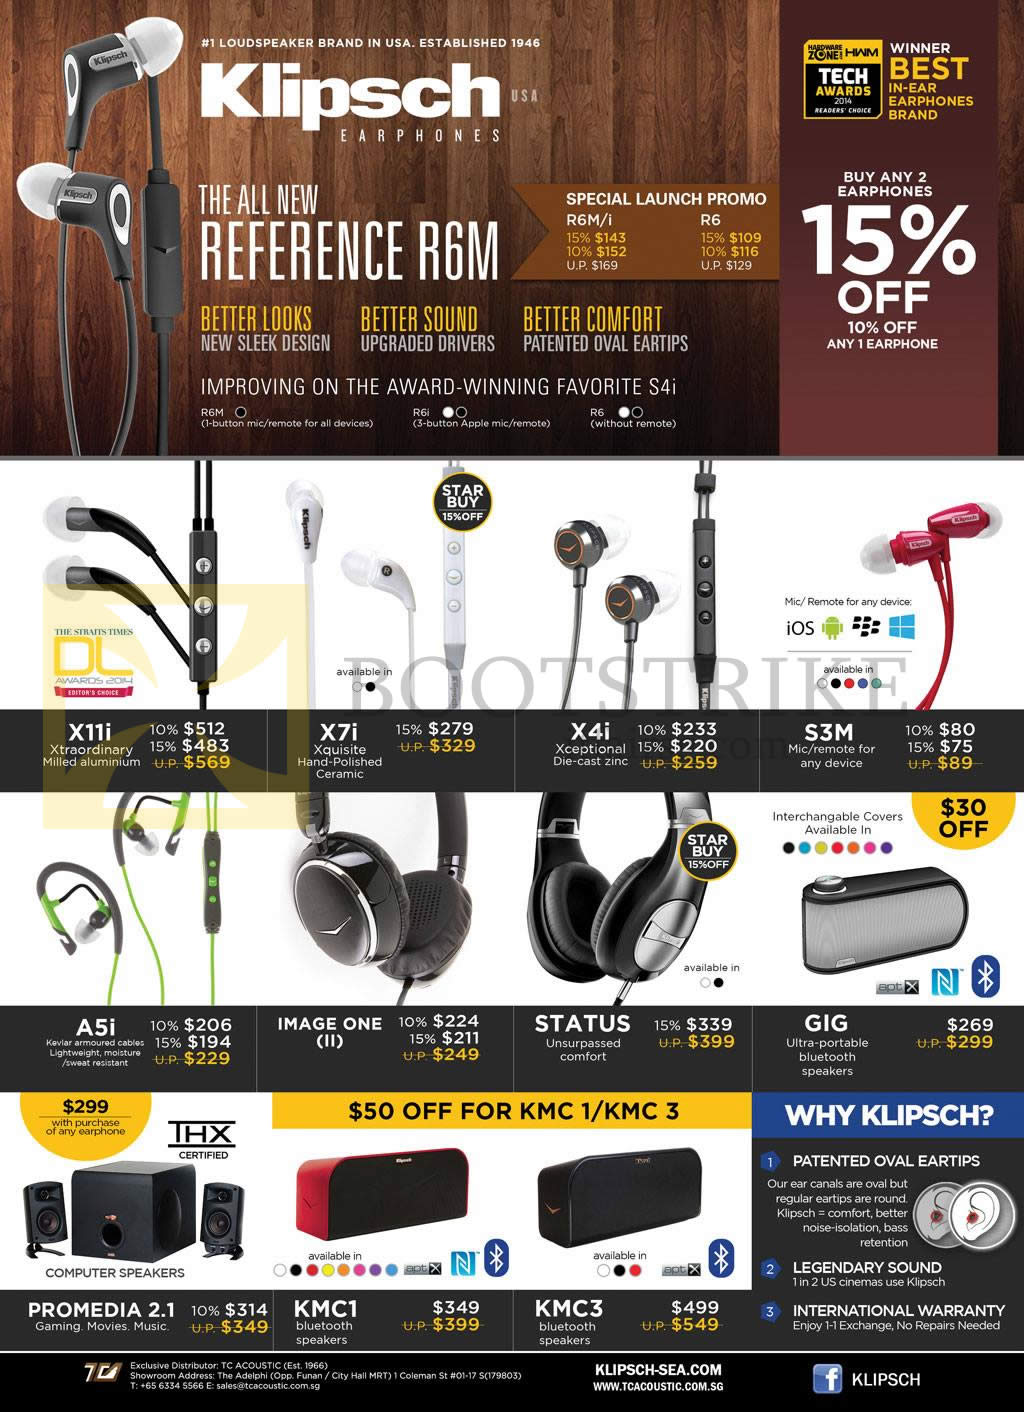 COMEX 2014 price list image brochure of Klipsch Speakers, Earphones X11i, X7i, X4i, S3M, A5i, Image One II, Status, GIG, Promedia 2.1, KMC 1, KMC 3